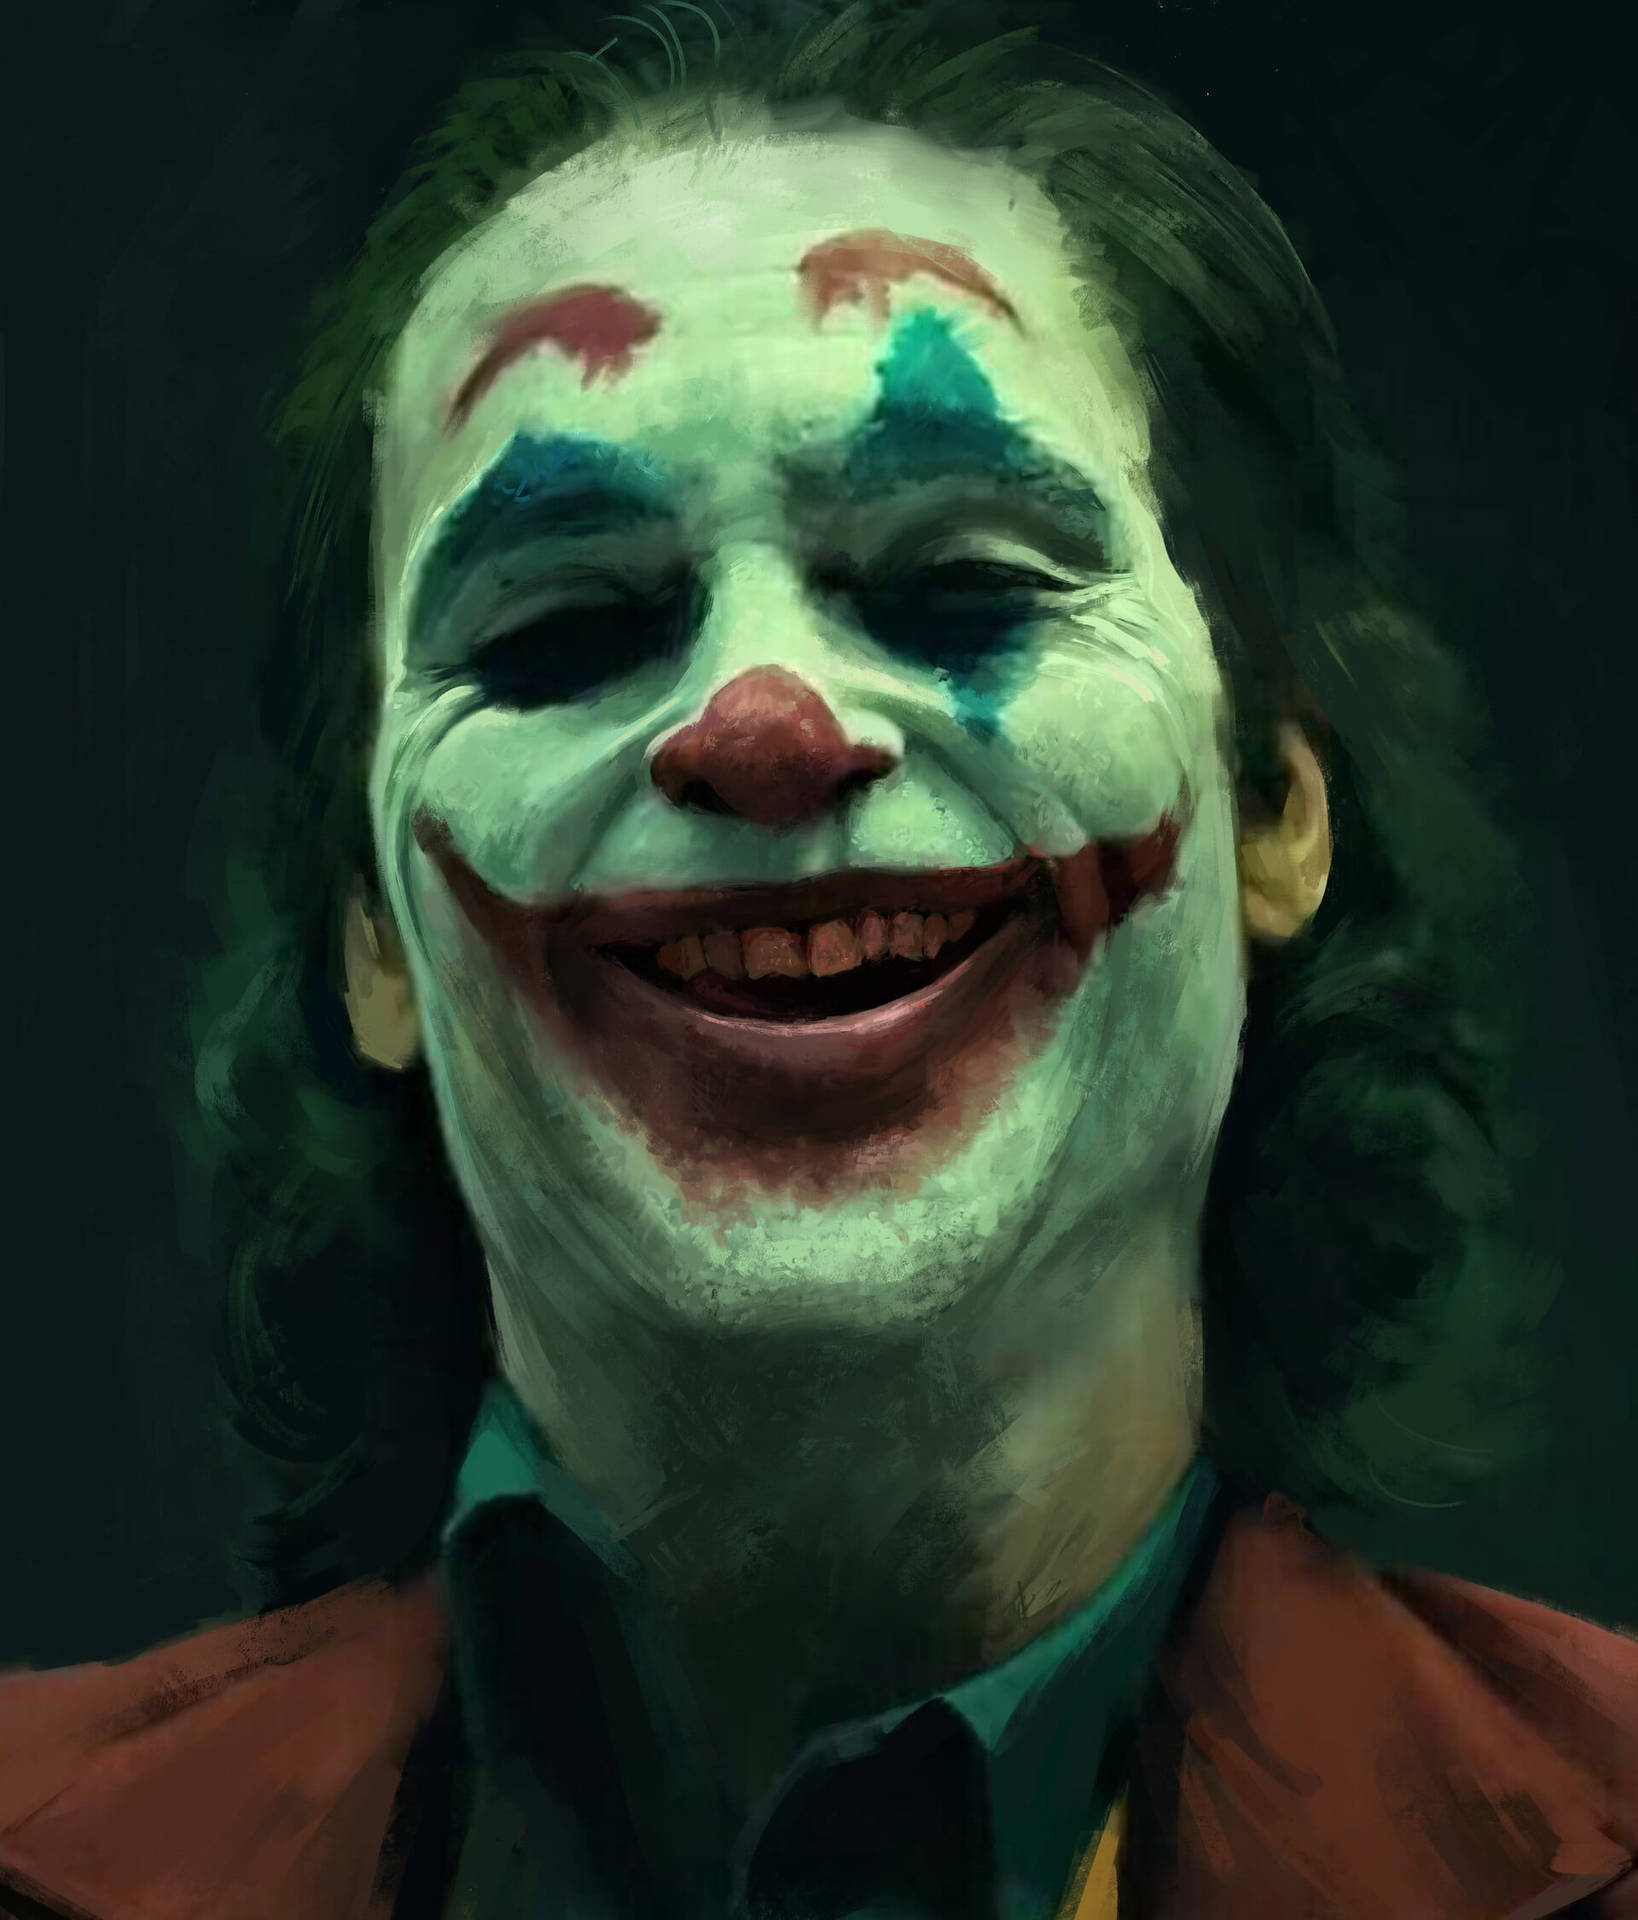 Röttleende Joker 2020 Wallpaper